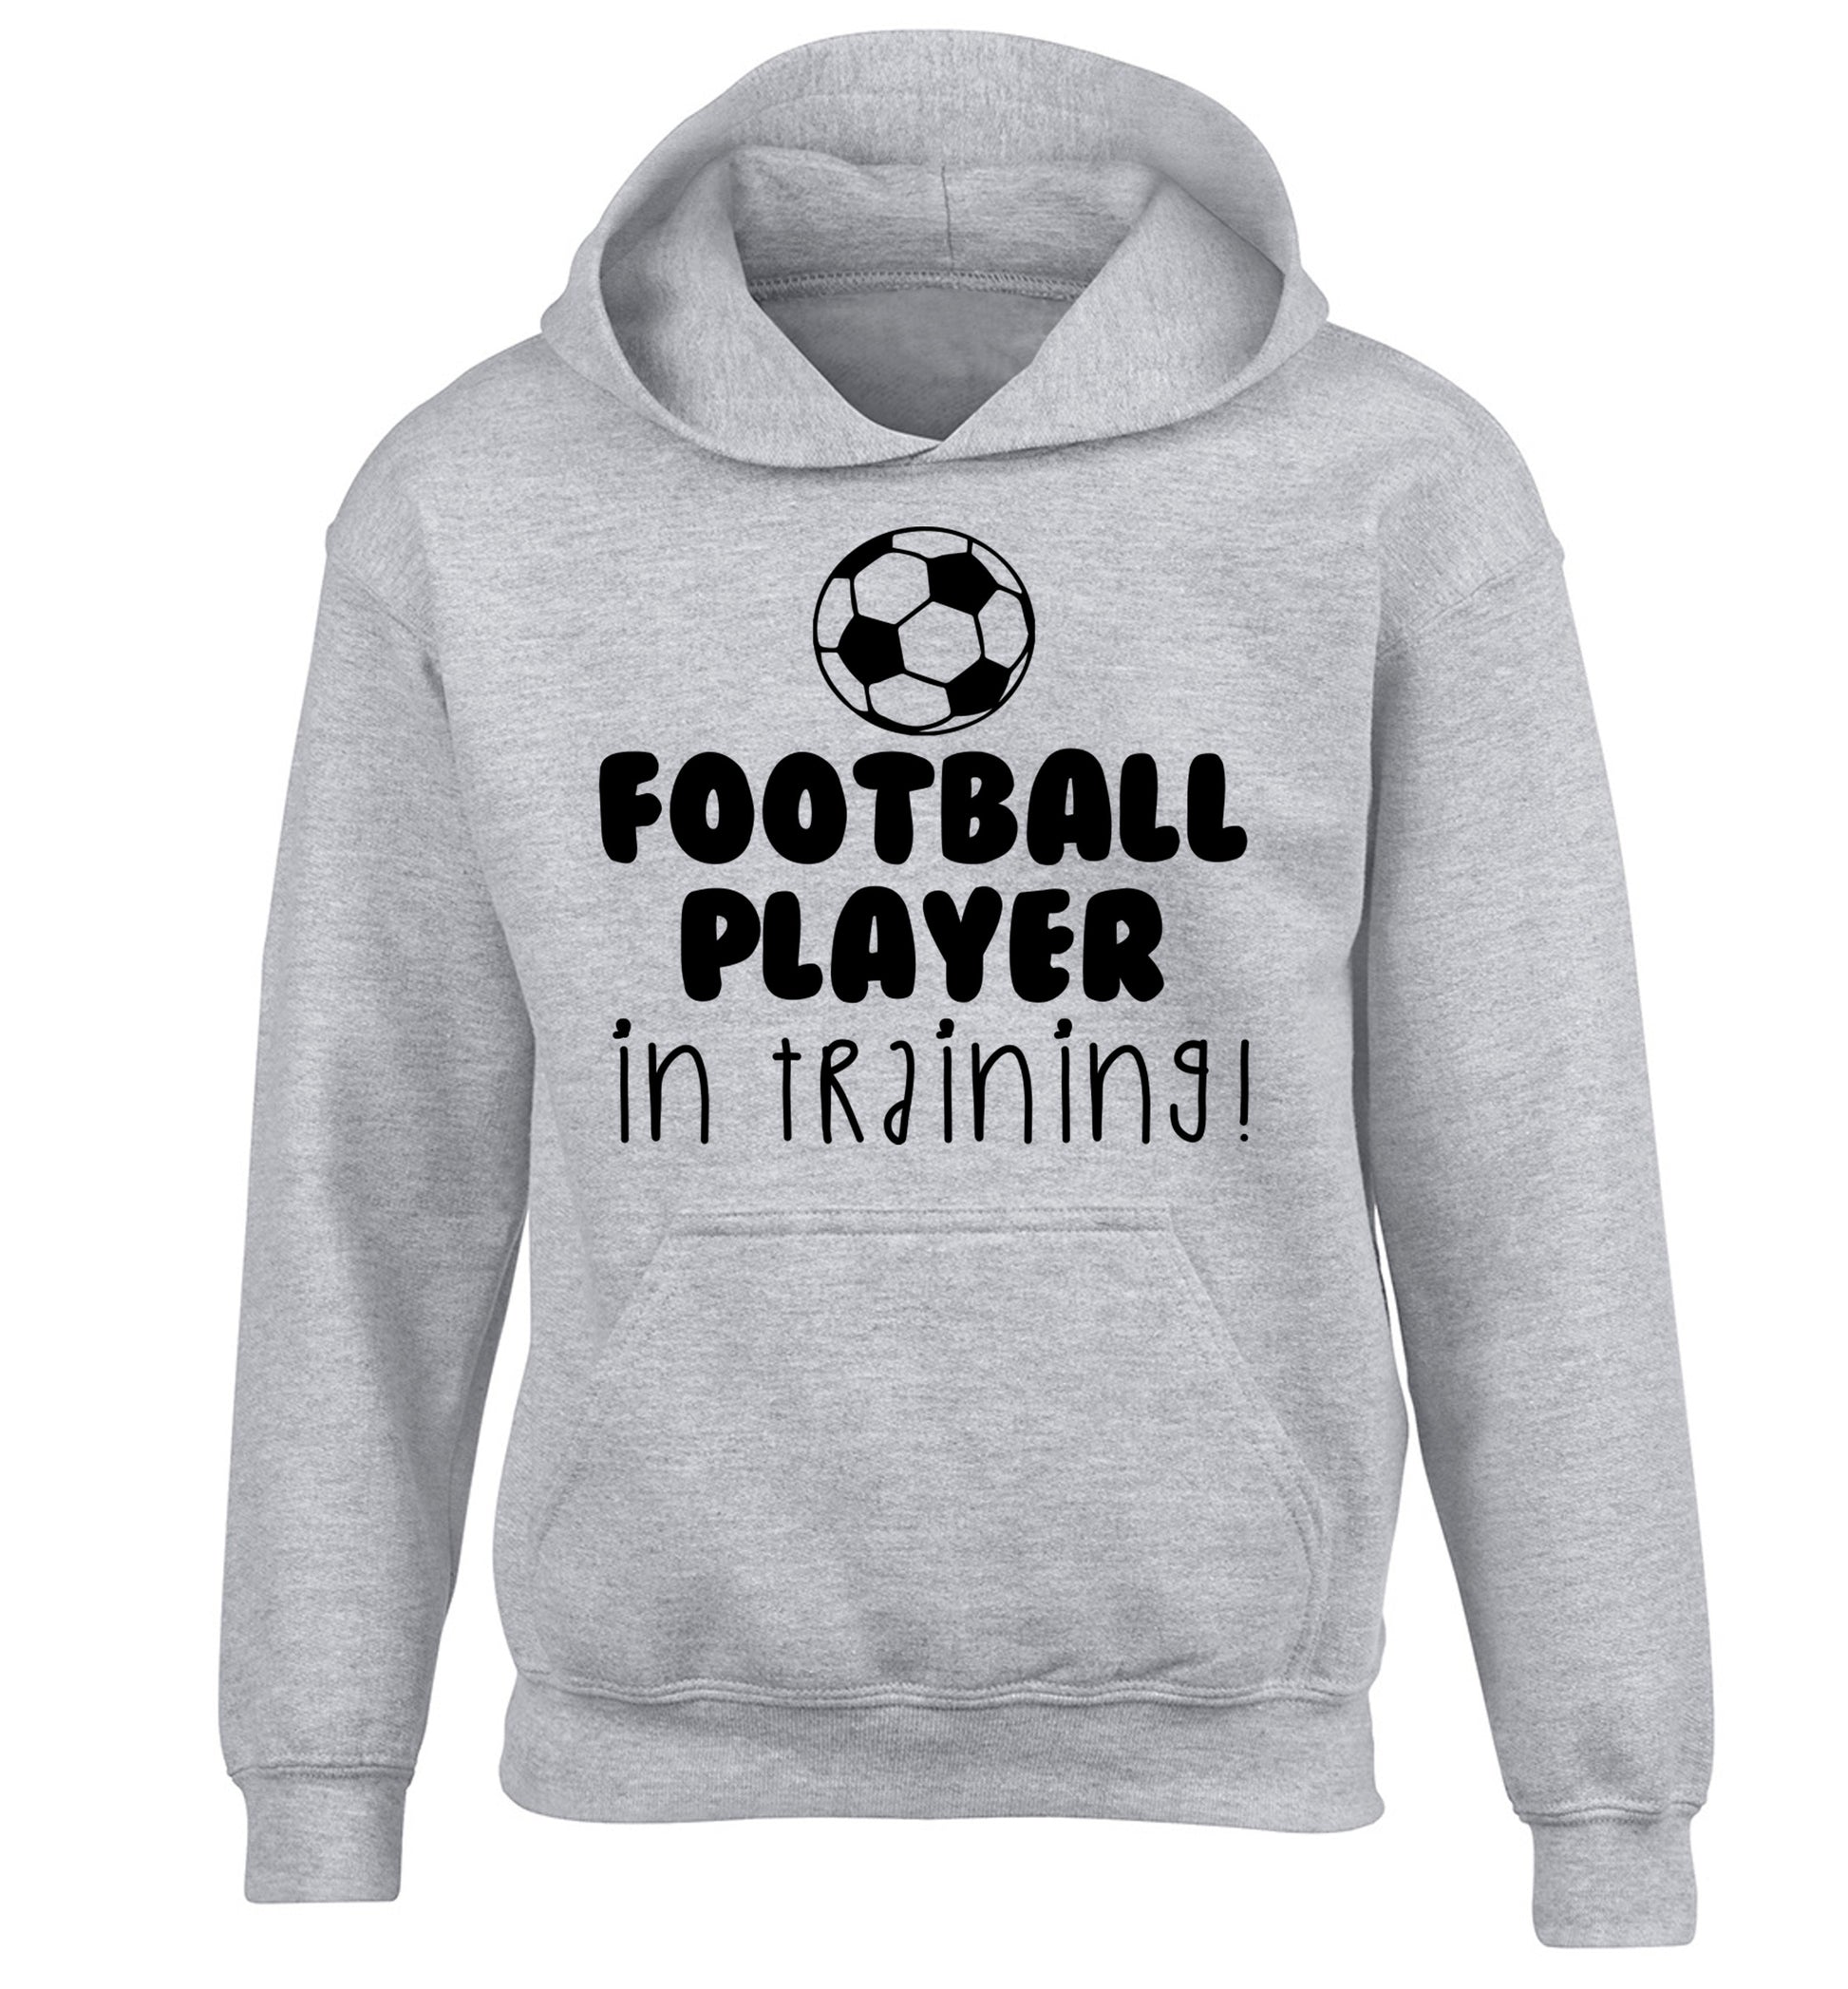 Football player in training children's grey hoodie 12-14 Years